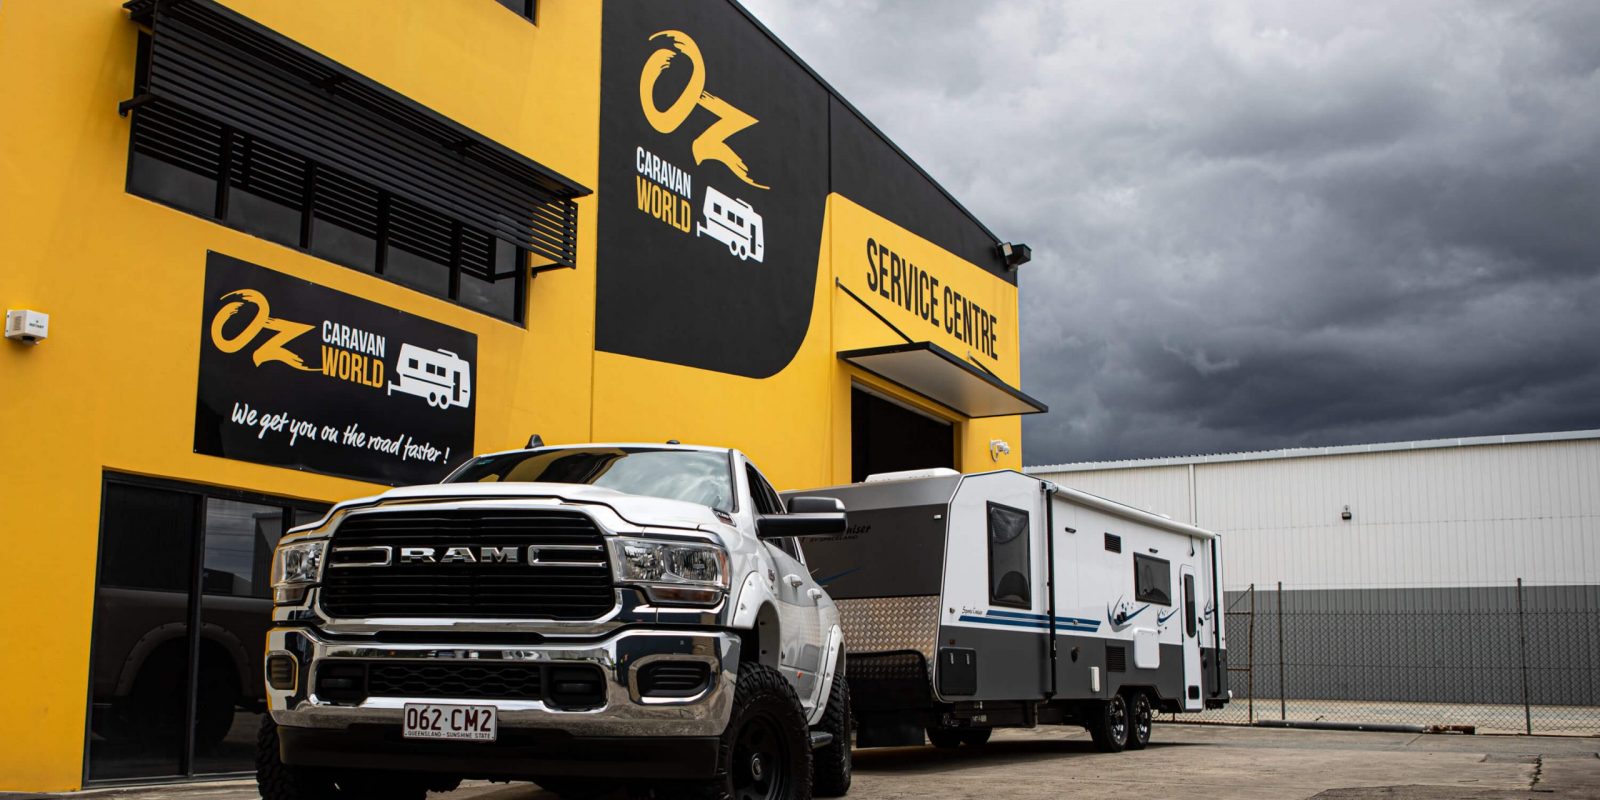 Oz Caravan World Customer Service